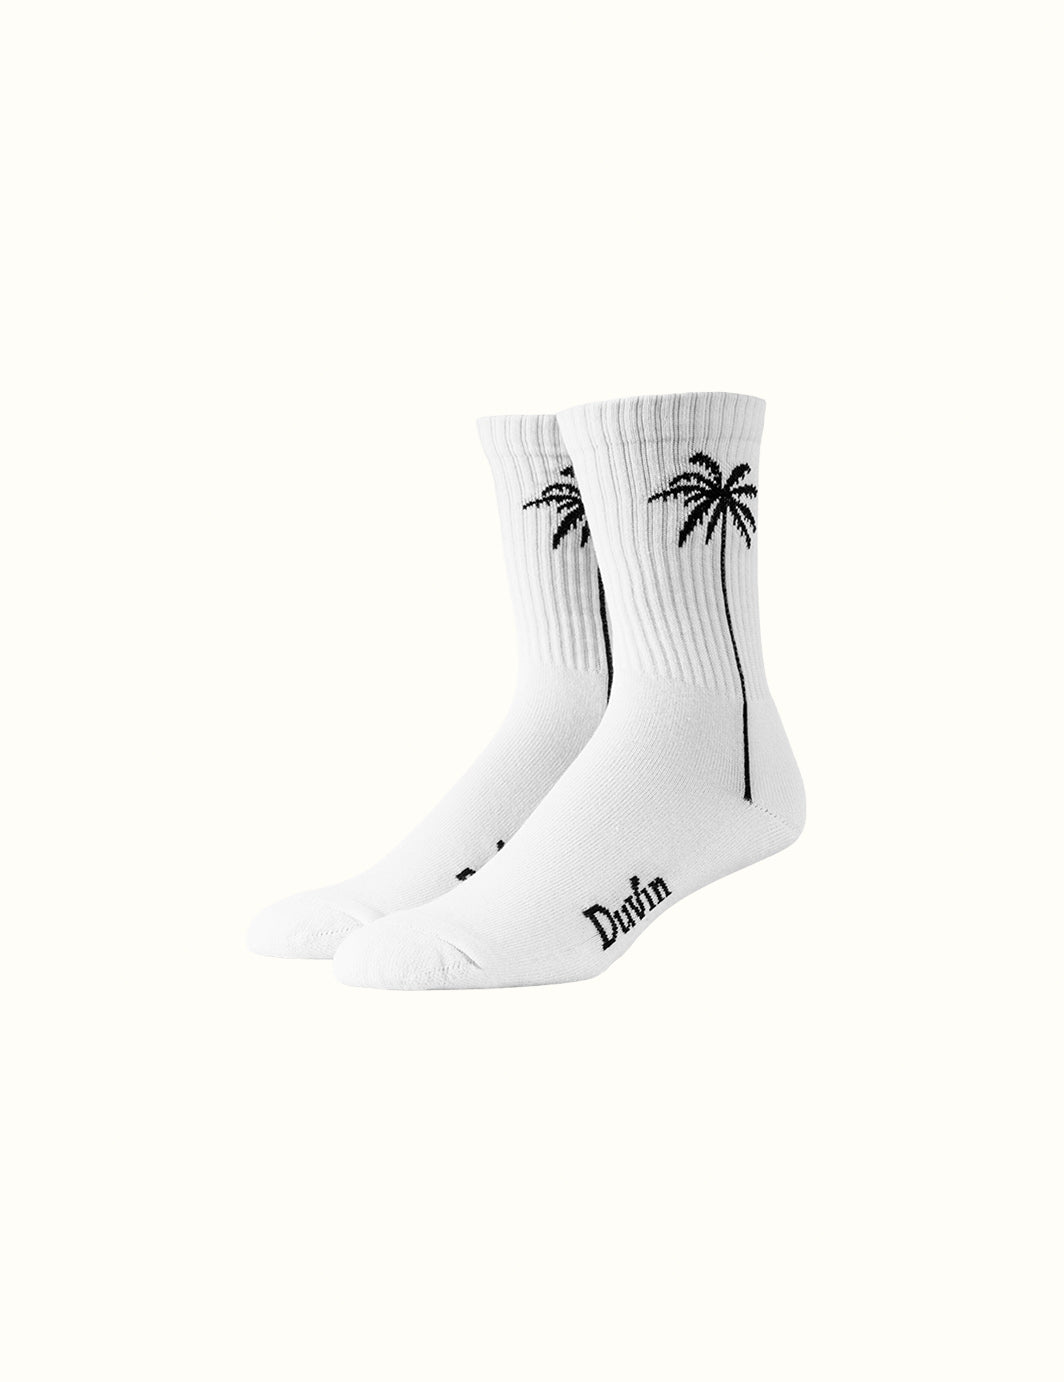 Sabal Palm Sock White